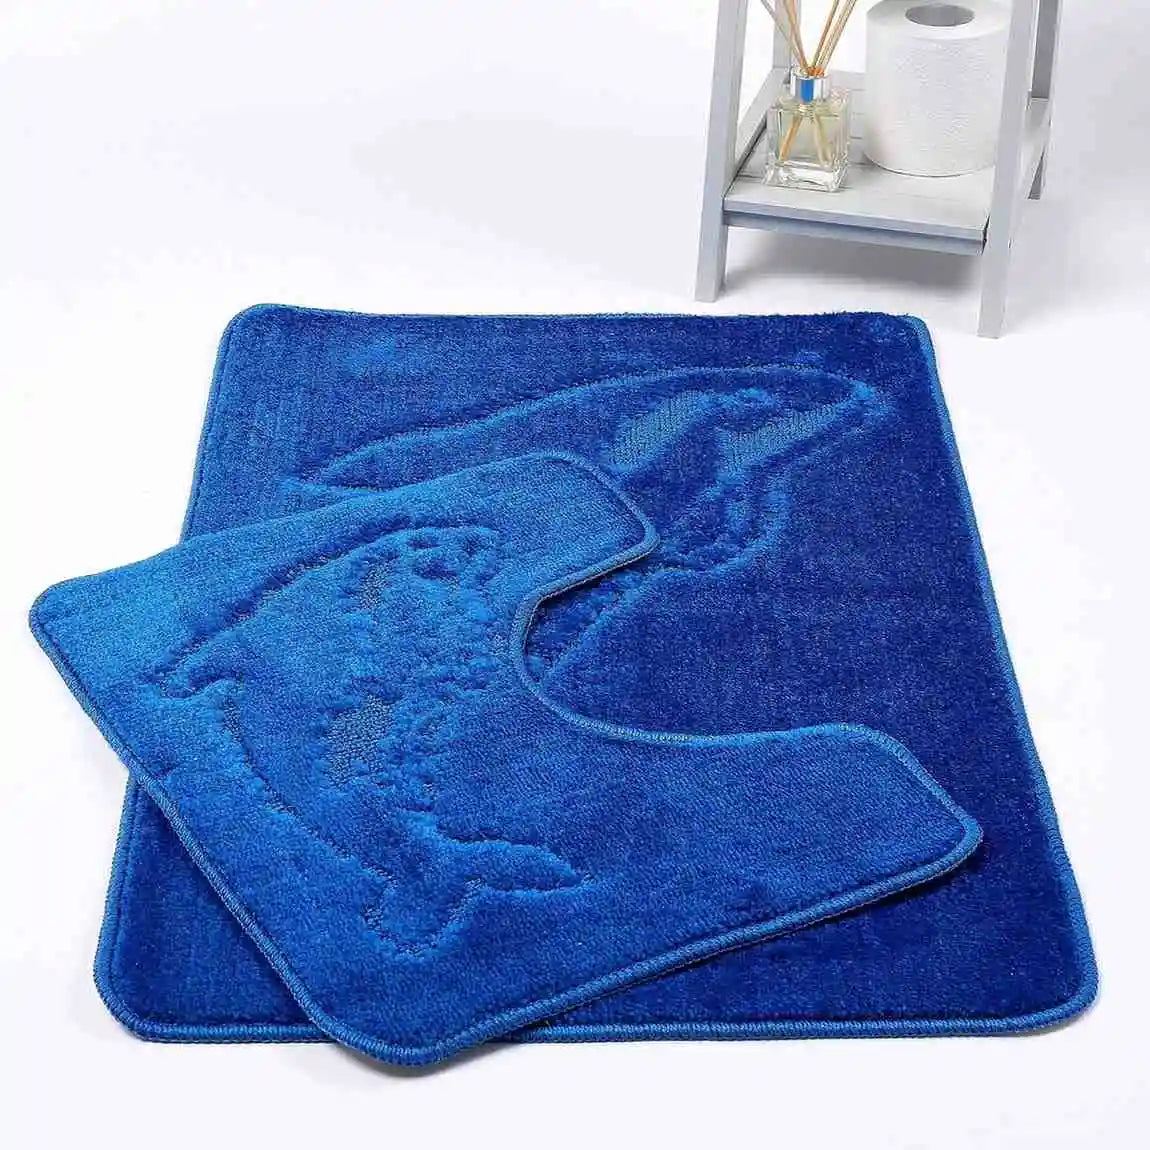 Dolphin bath mat royal blue